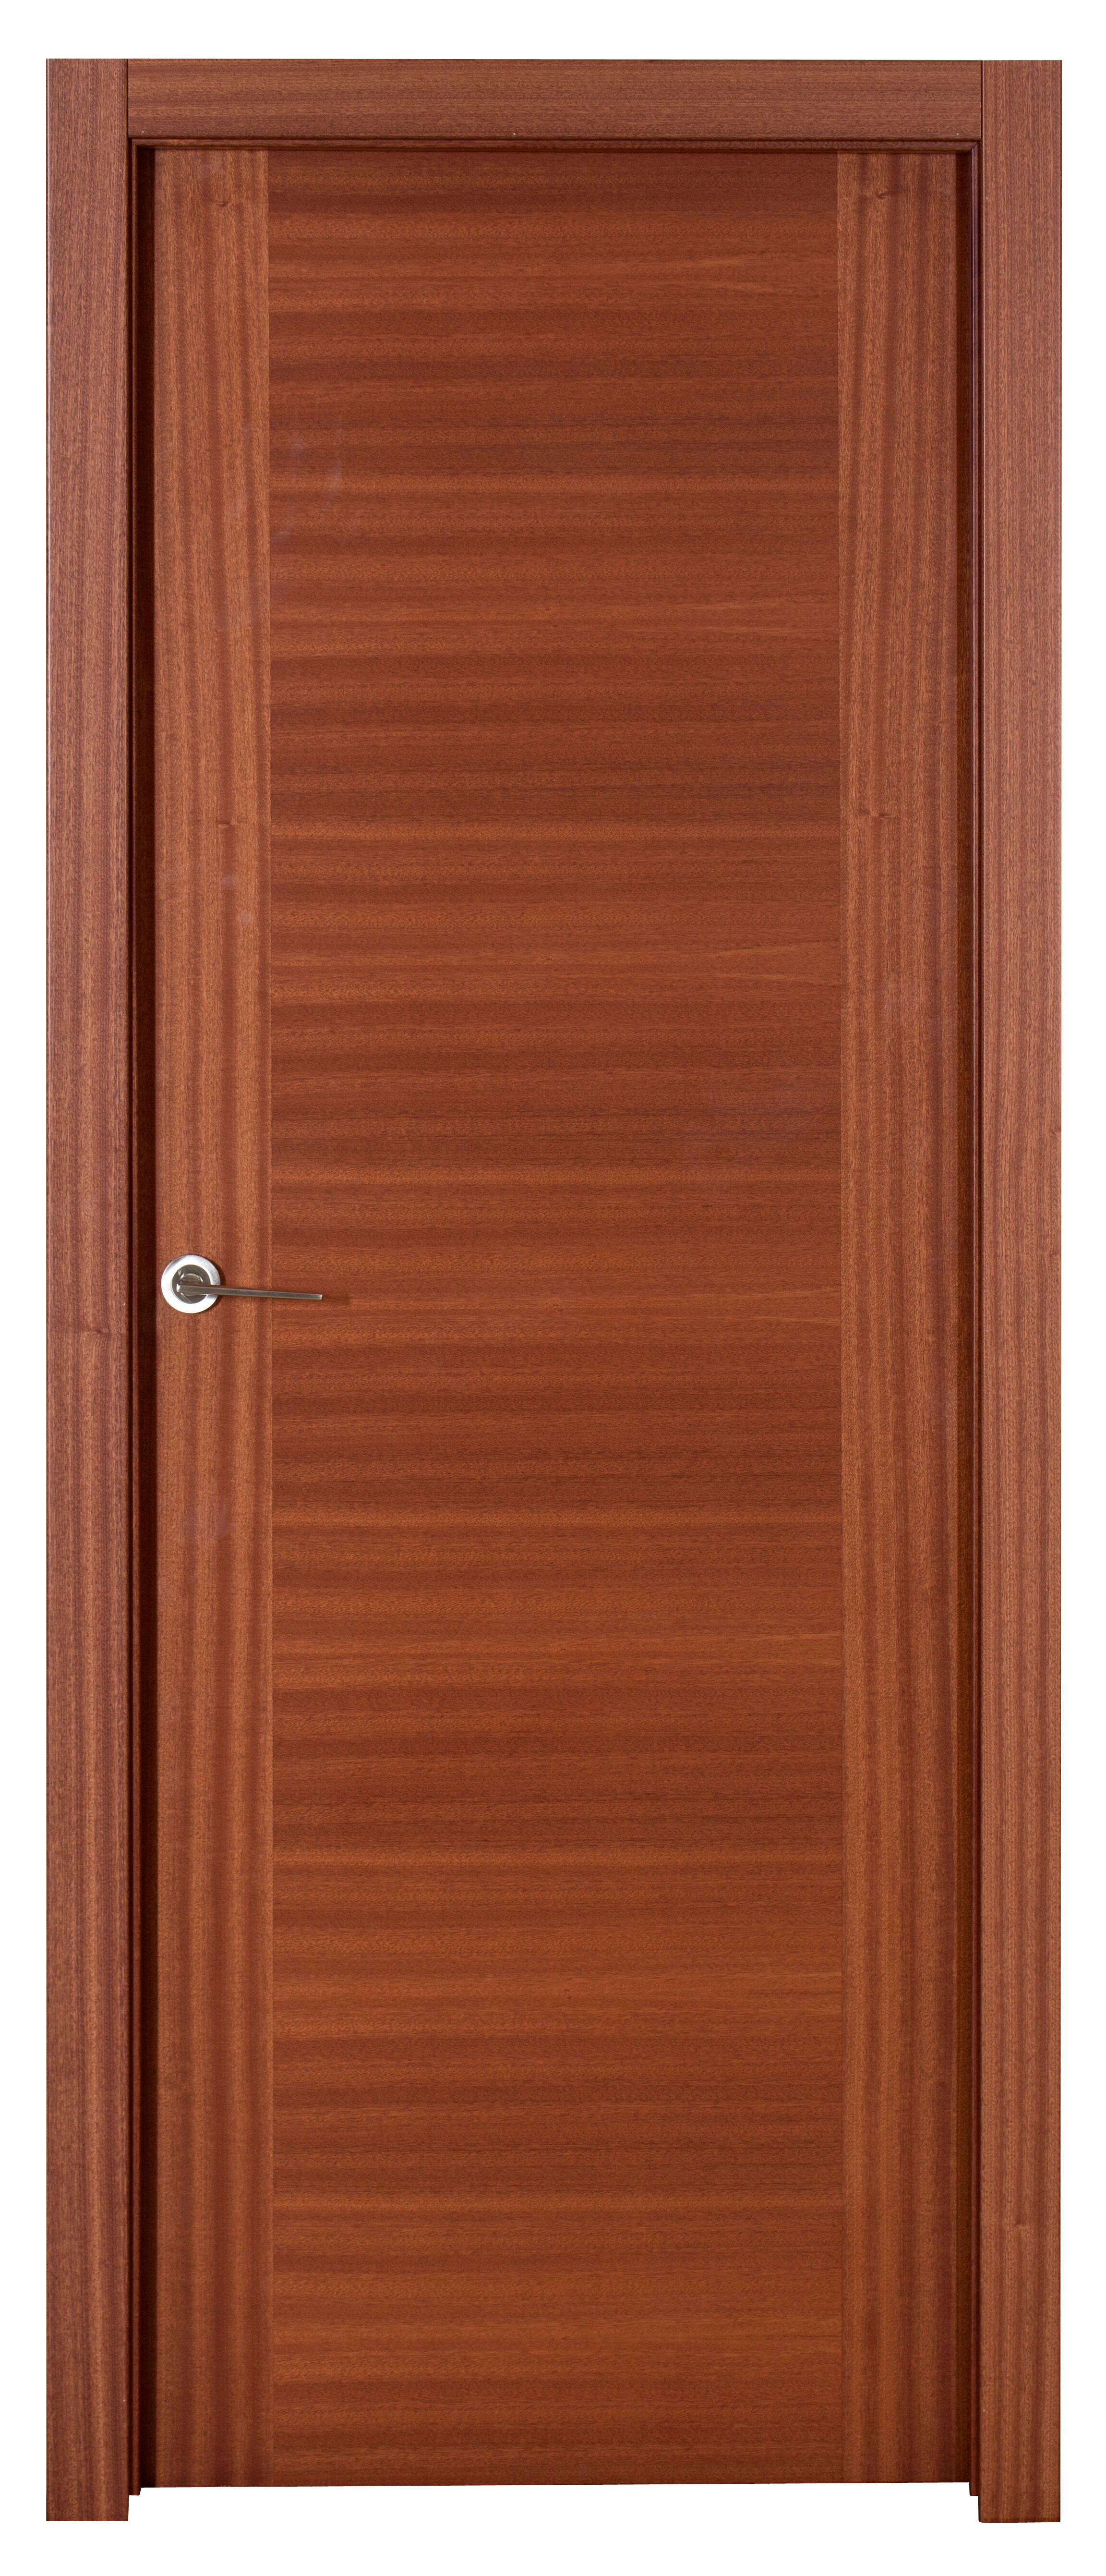 Puerta niza sapelli de apertura derecha de 72.5 cm